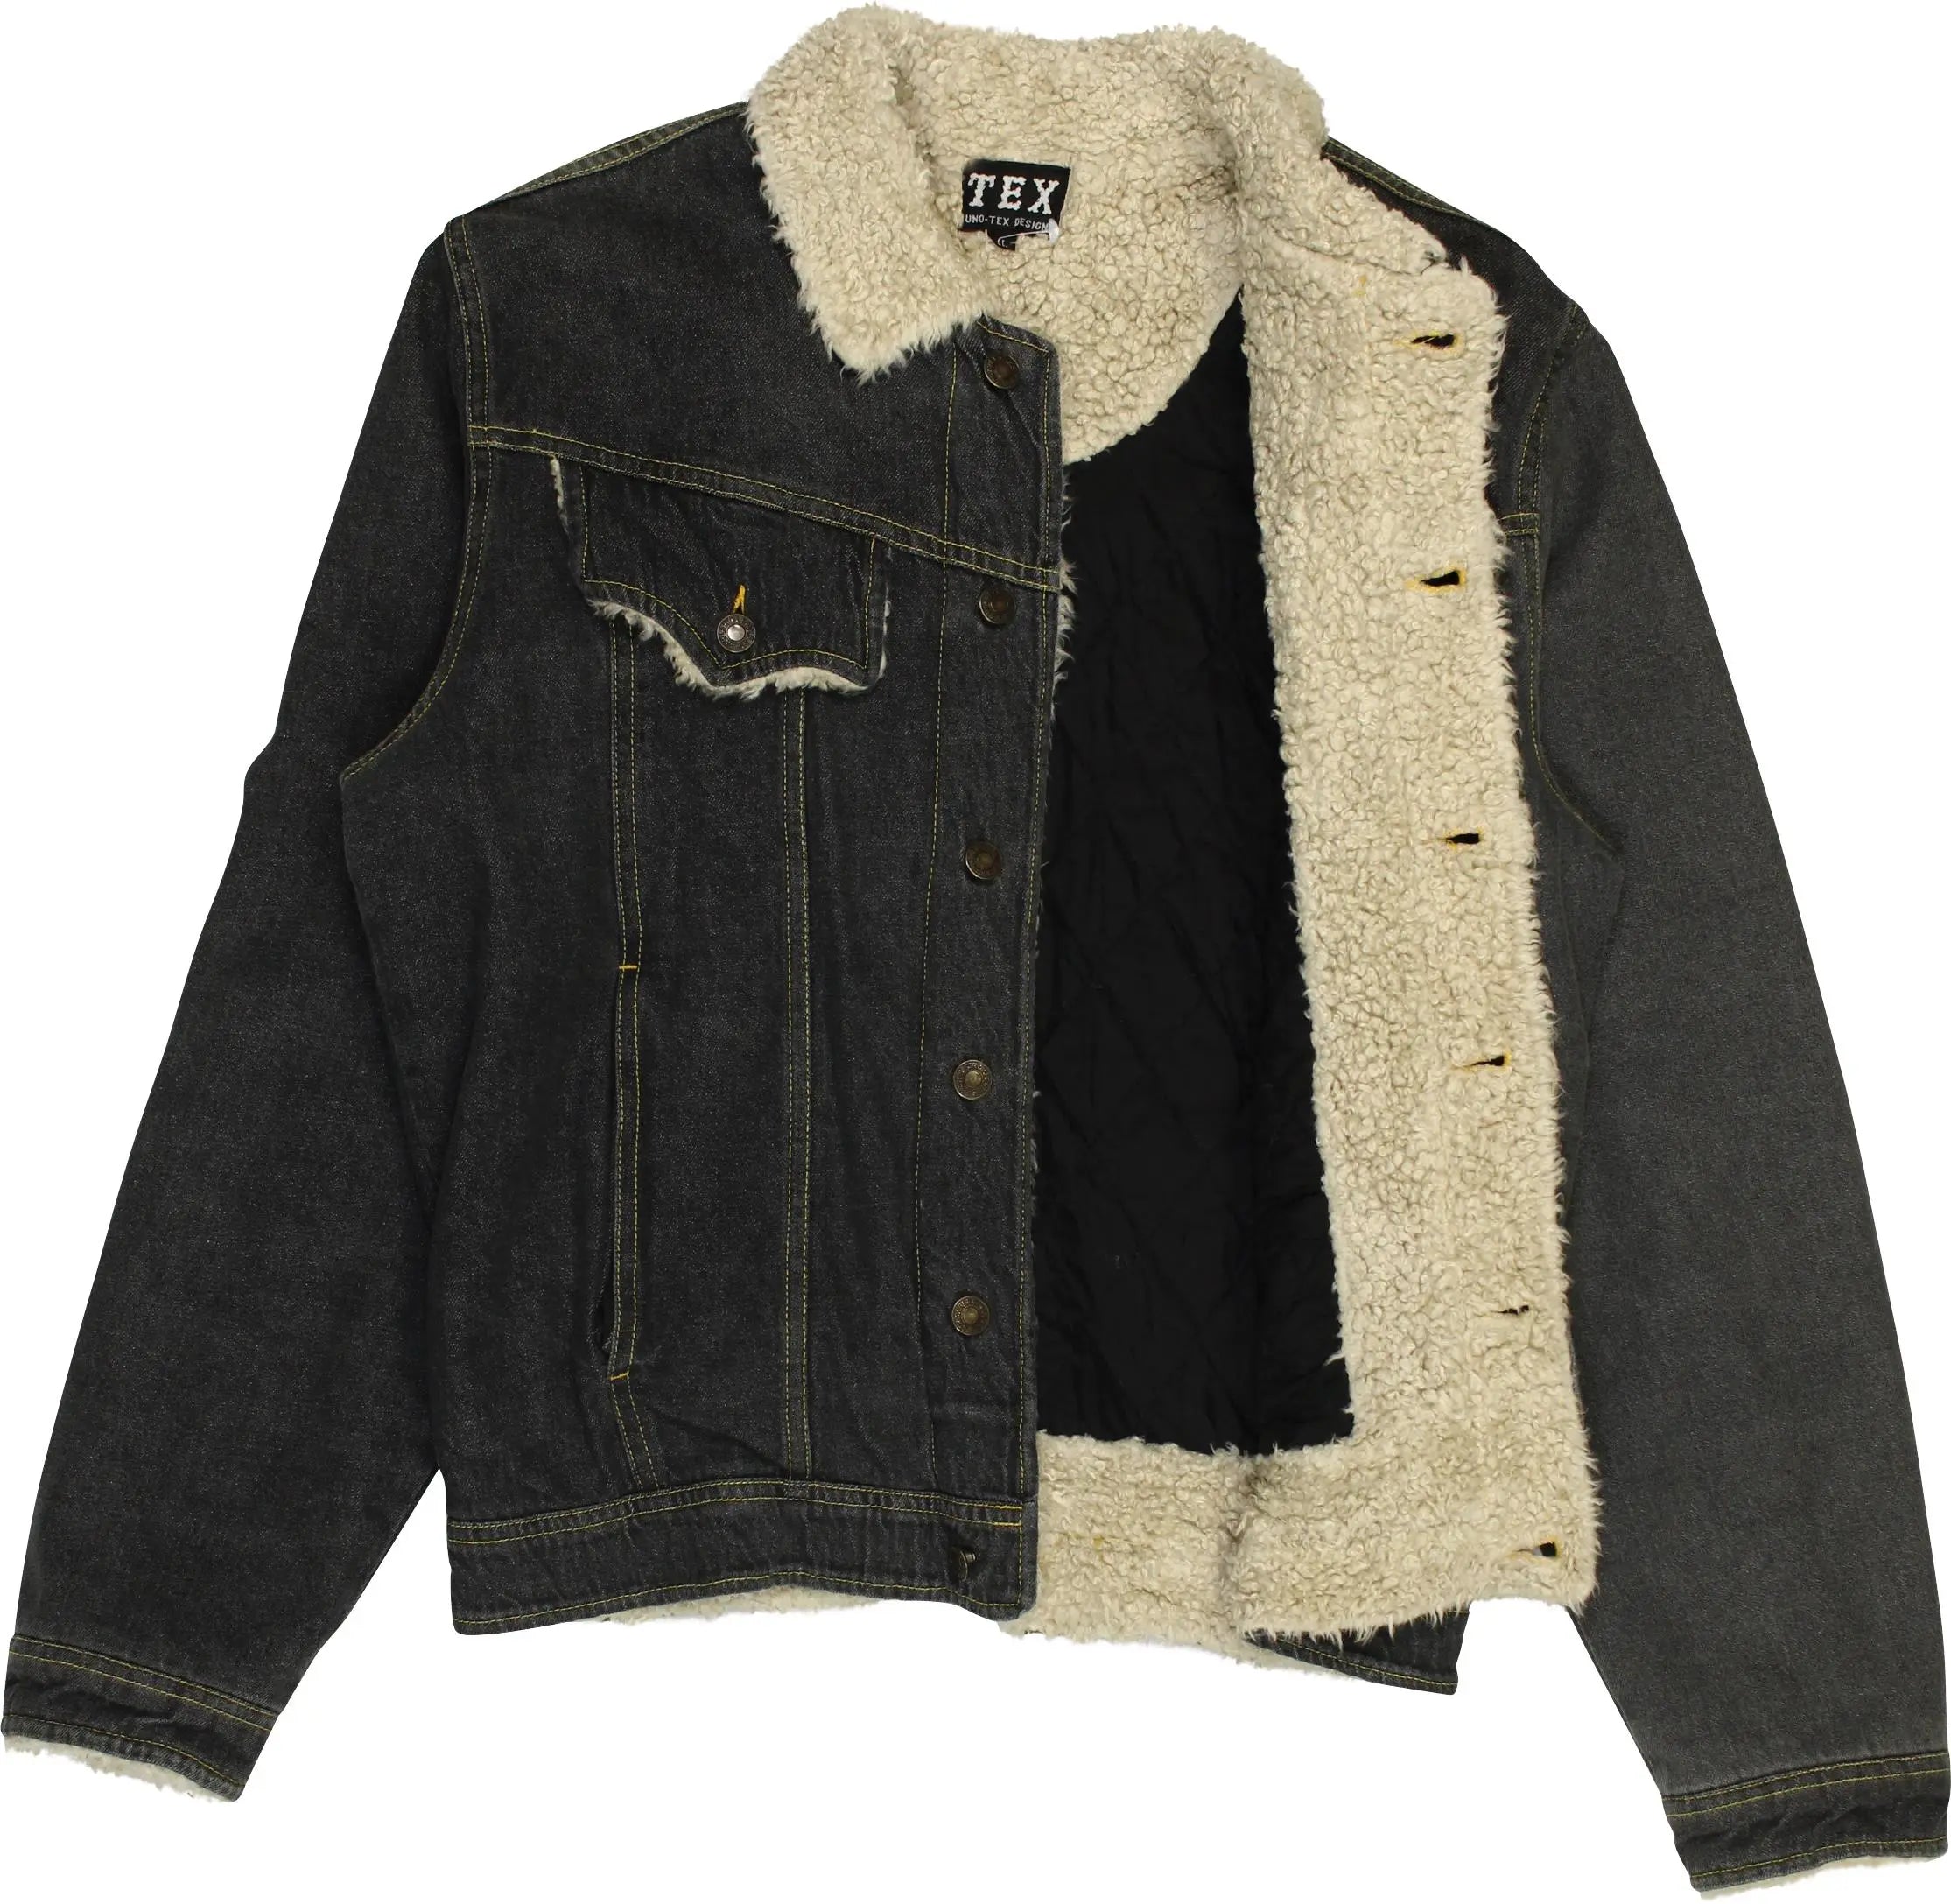 Uno-Tex Design - Teddy Denim Jacket- ThriftTale.com - Vintage and second handclothing